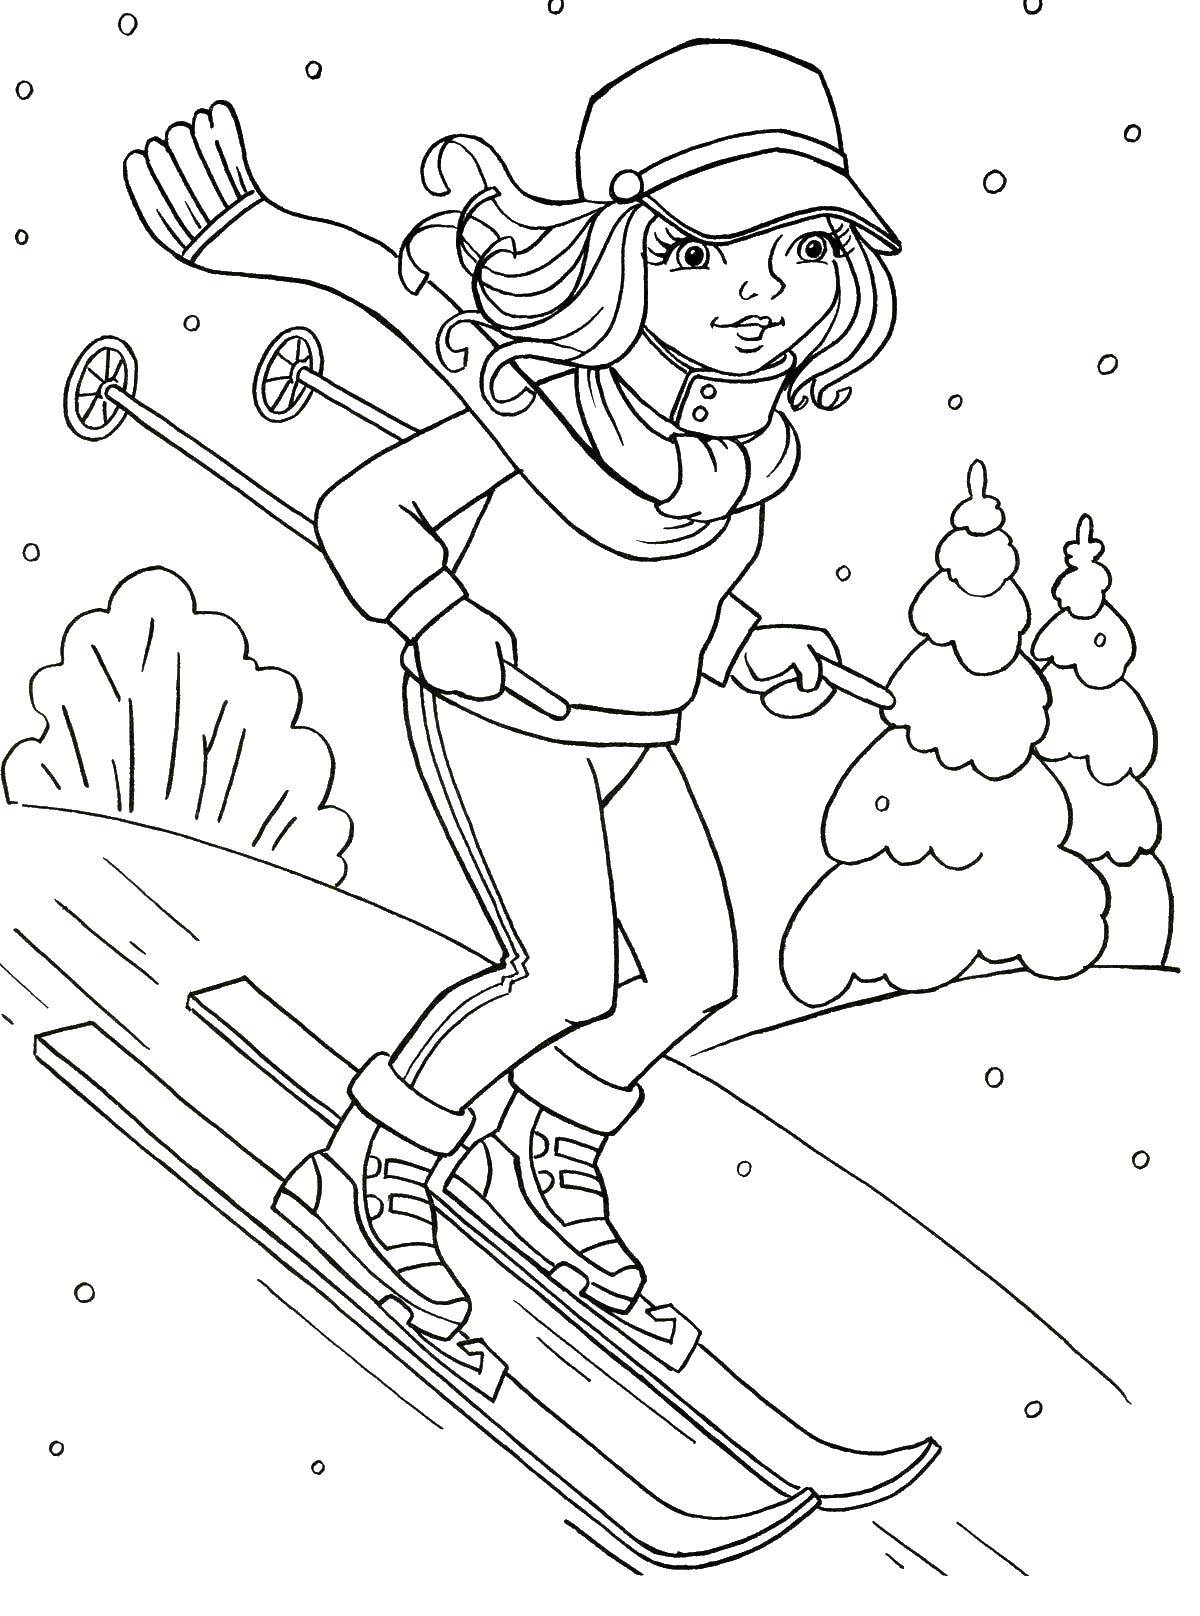 Coloring Girl on skis. Category skiing. Tags:  girl, ski, winter.